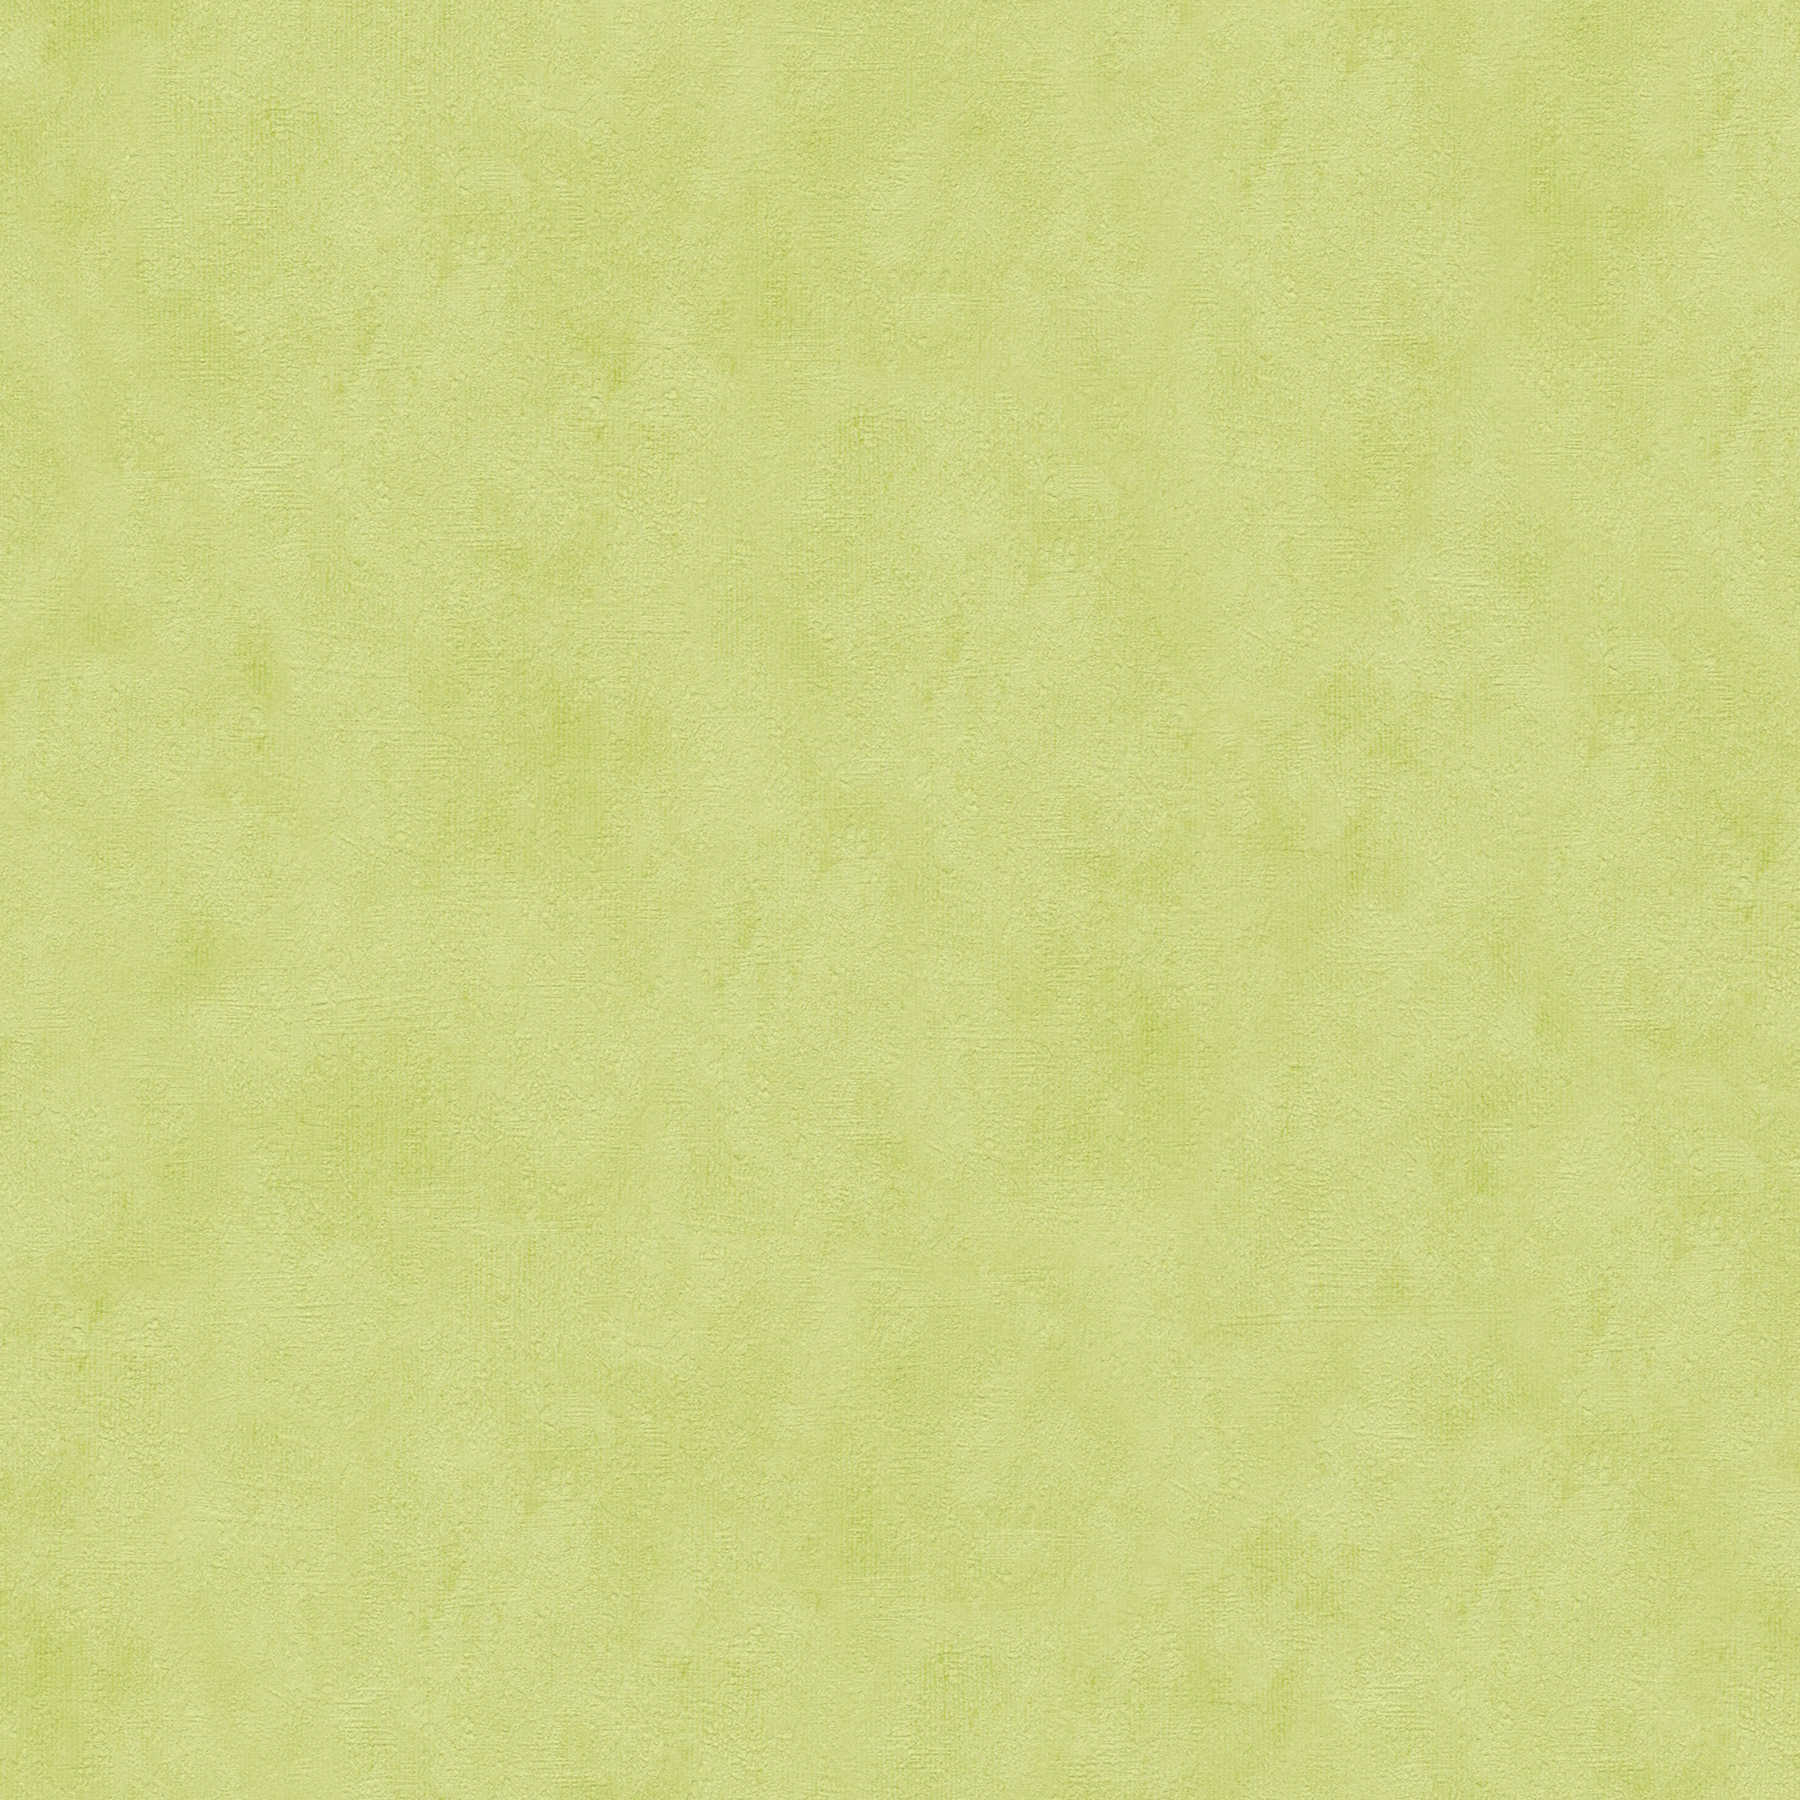 Apfelgrüne Papiertapete mit Farb- & Strukturmuster – Grün
